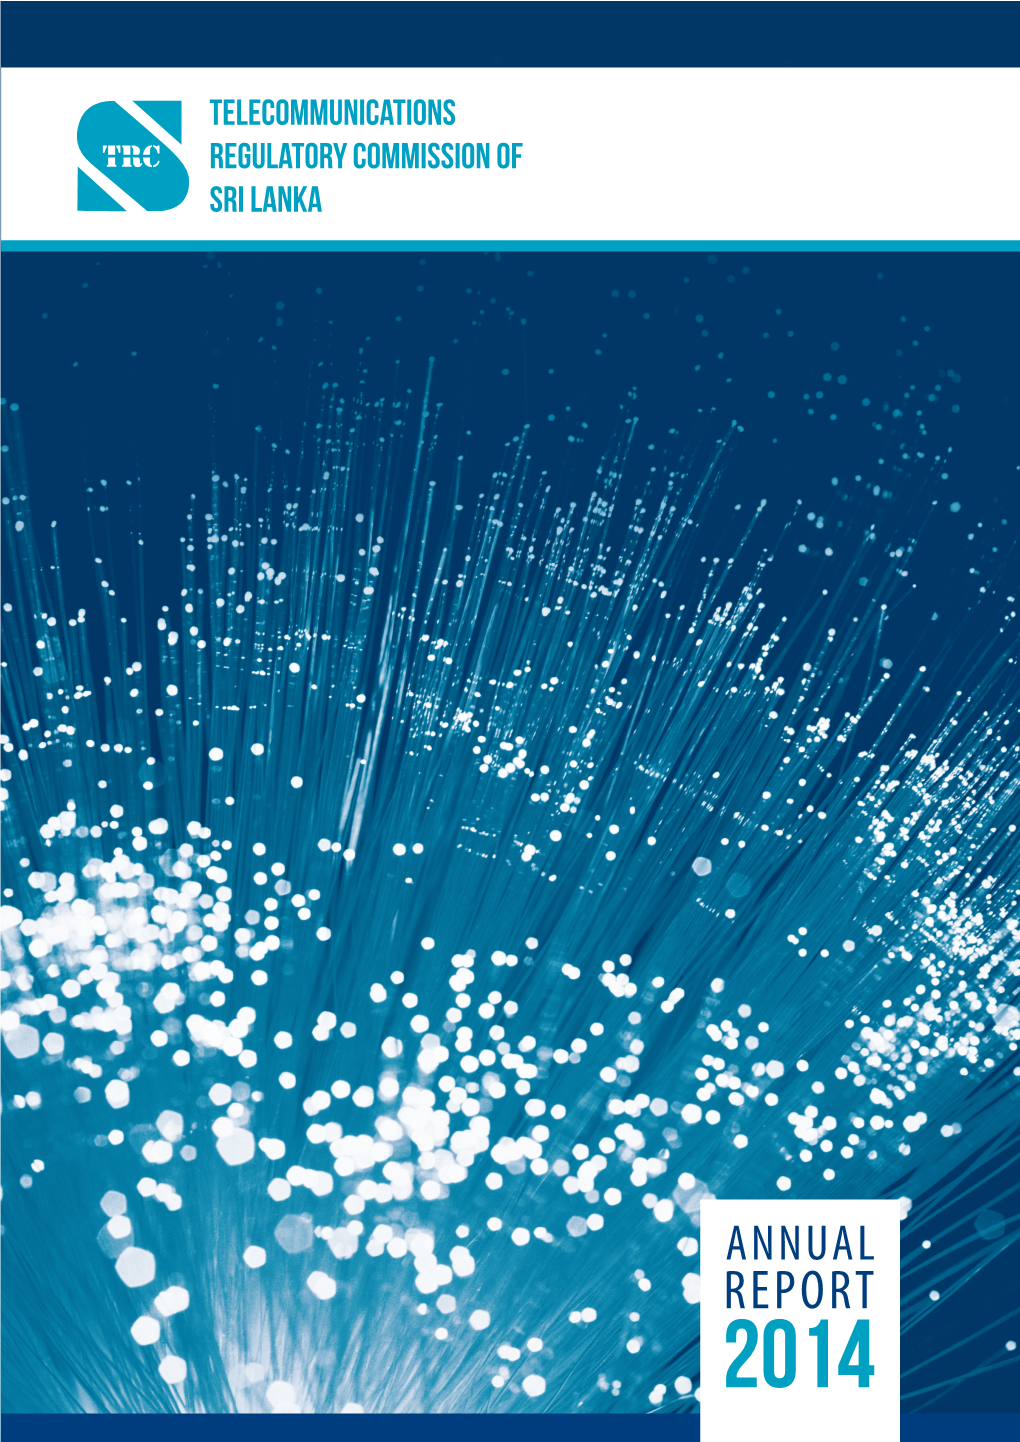 Annual Report of the Telecommunications Regulatory